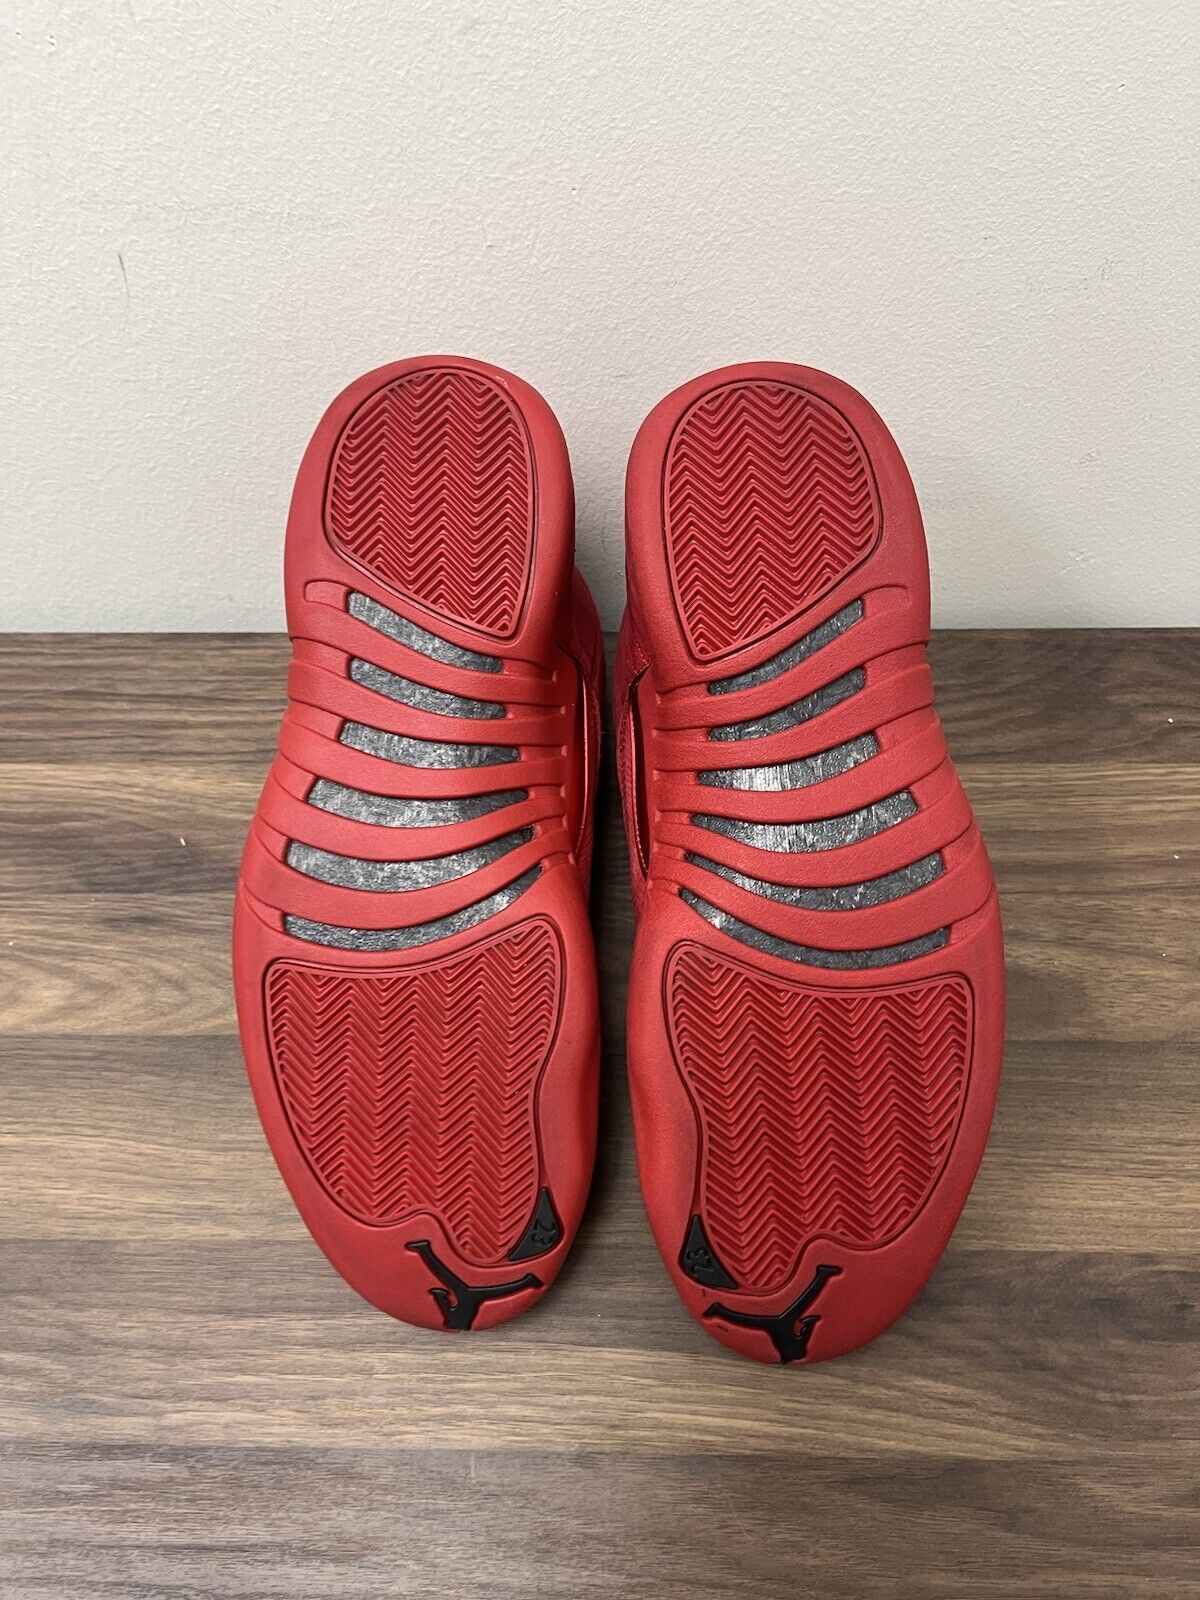 Air Jordan 12 Retro “Gym Red” Size 11 No Box (130690-601) Red Black XII